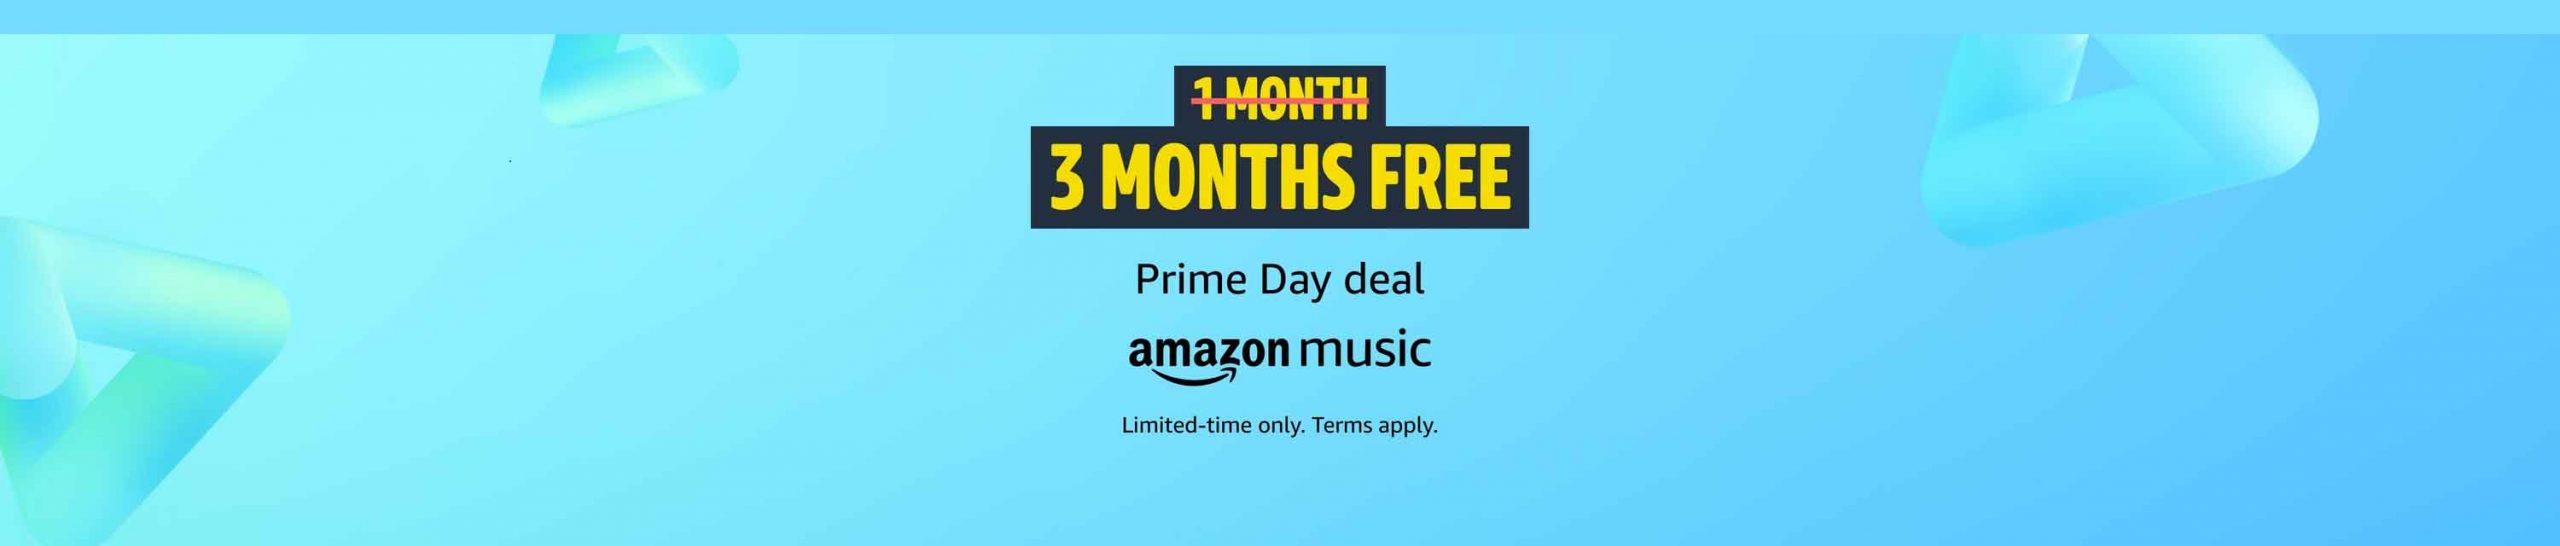 Amazon Music Unlimited 